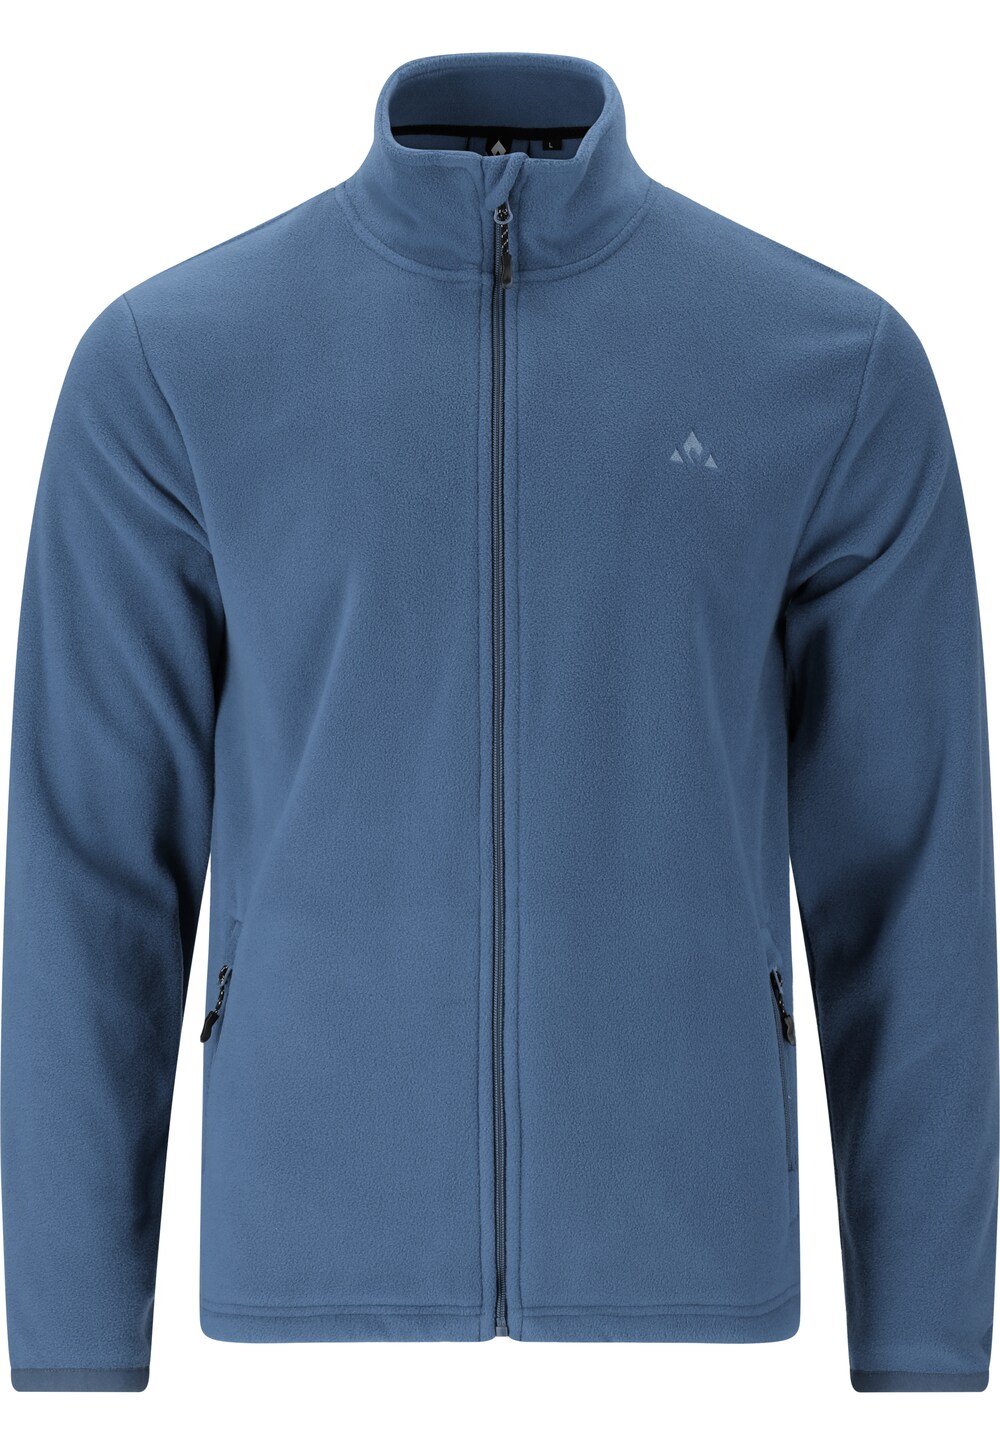 Спортивная флисовая куртка Whistler Cocoon, темно-синий цена и фото